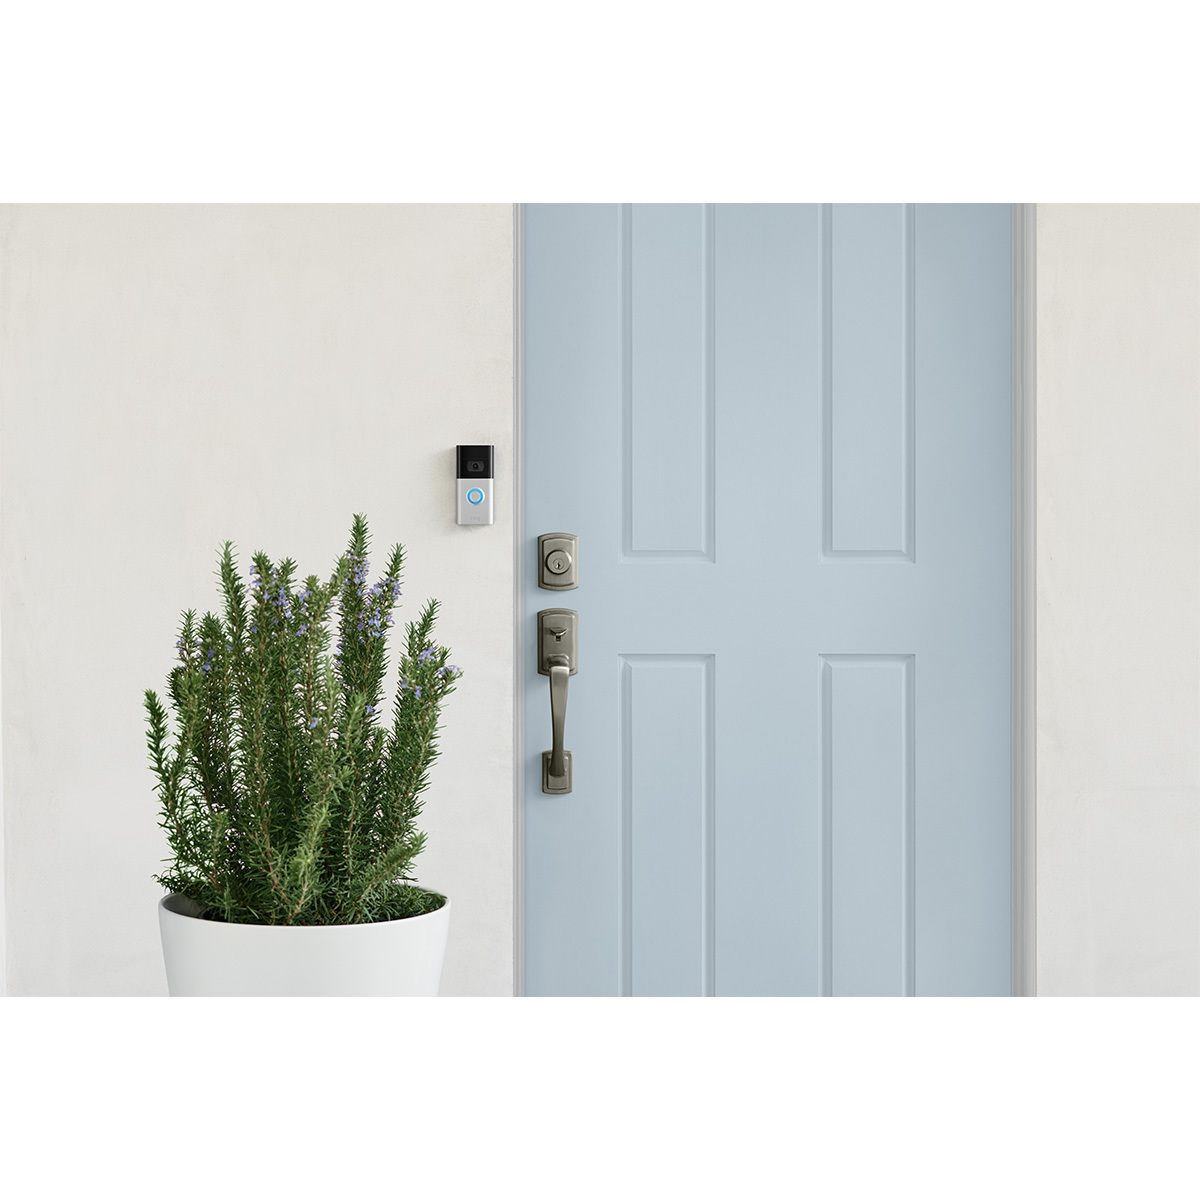 Lifestyle image of ring door bell outside front door